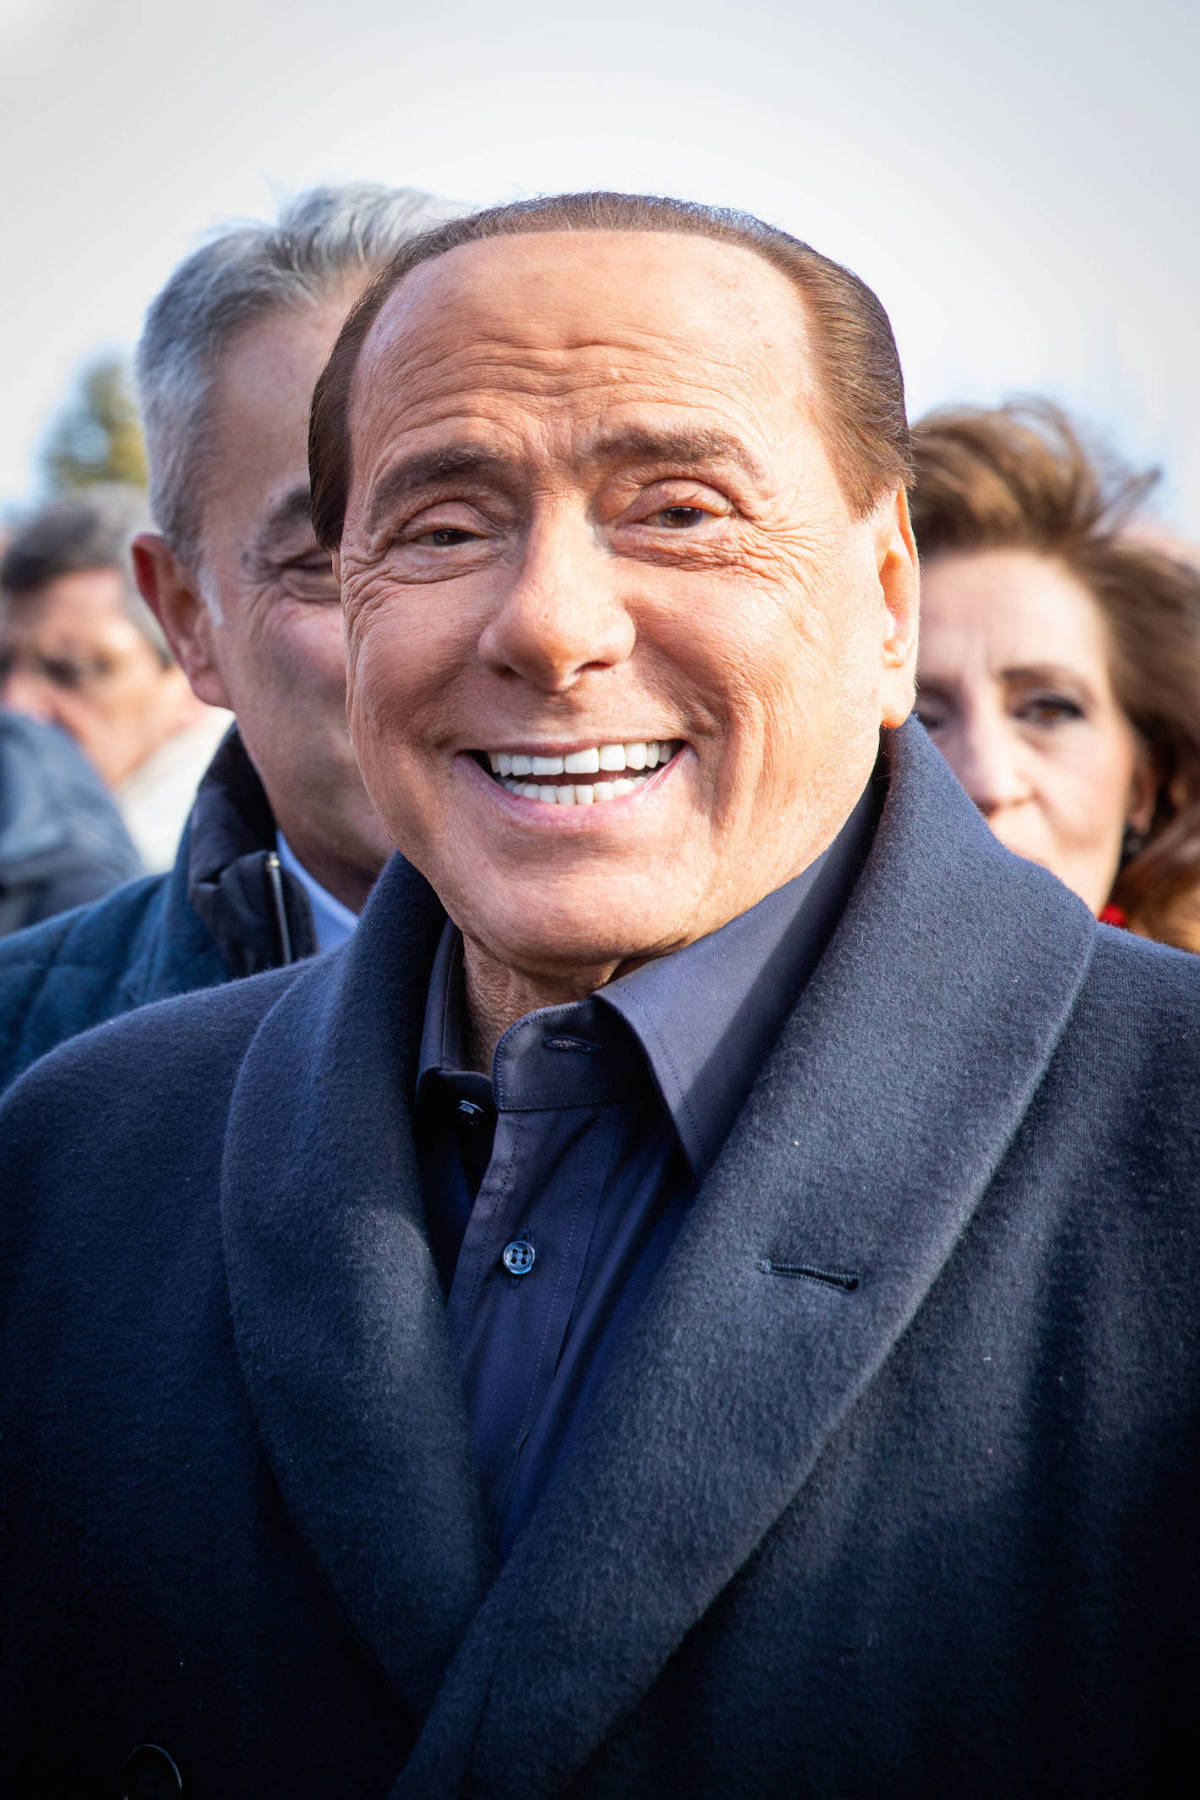 20221503-bb-imago-Silvio Berlusconi